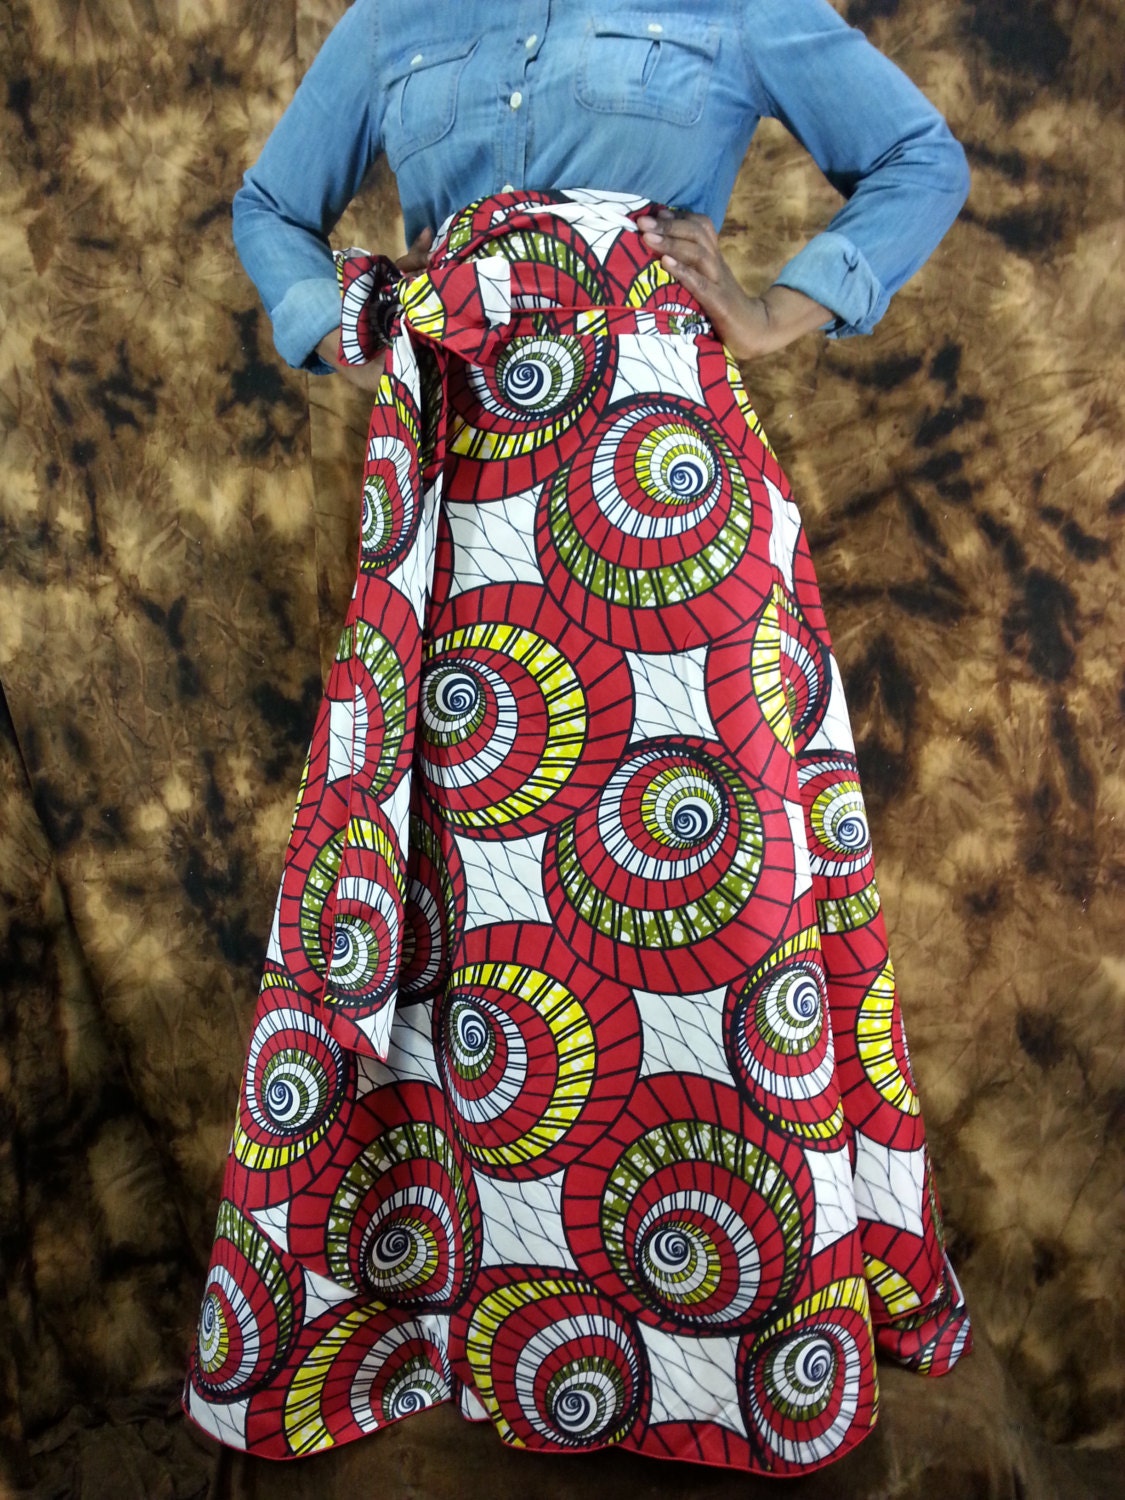 Shop African Wax Print WRAP Skirt High Waist. fits up to size